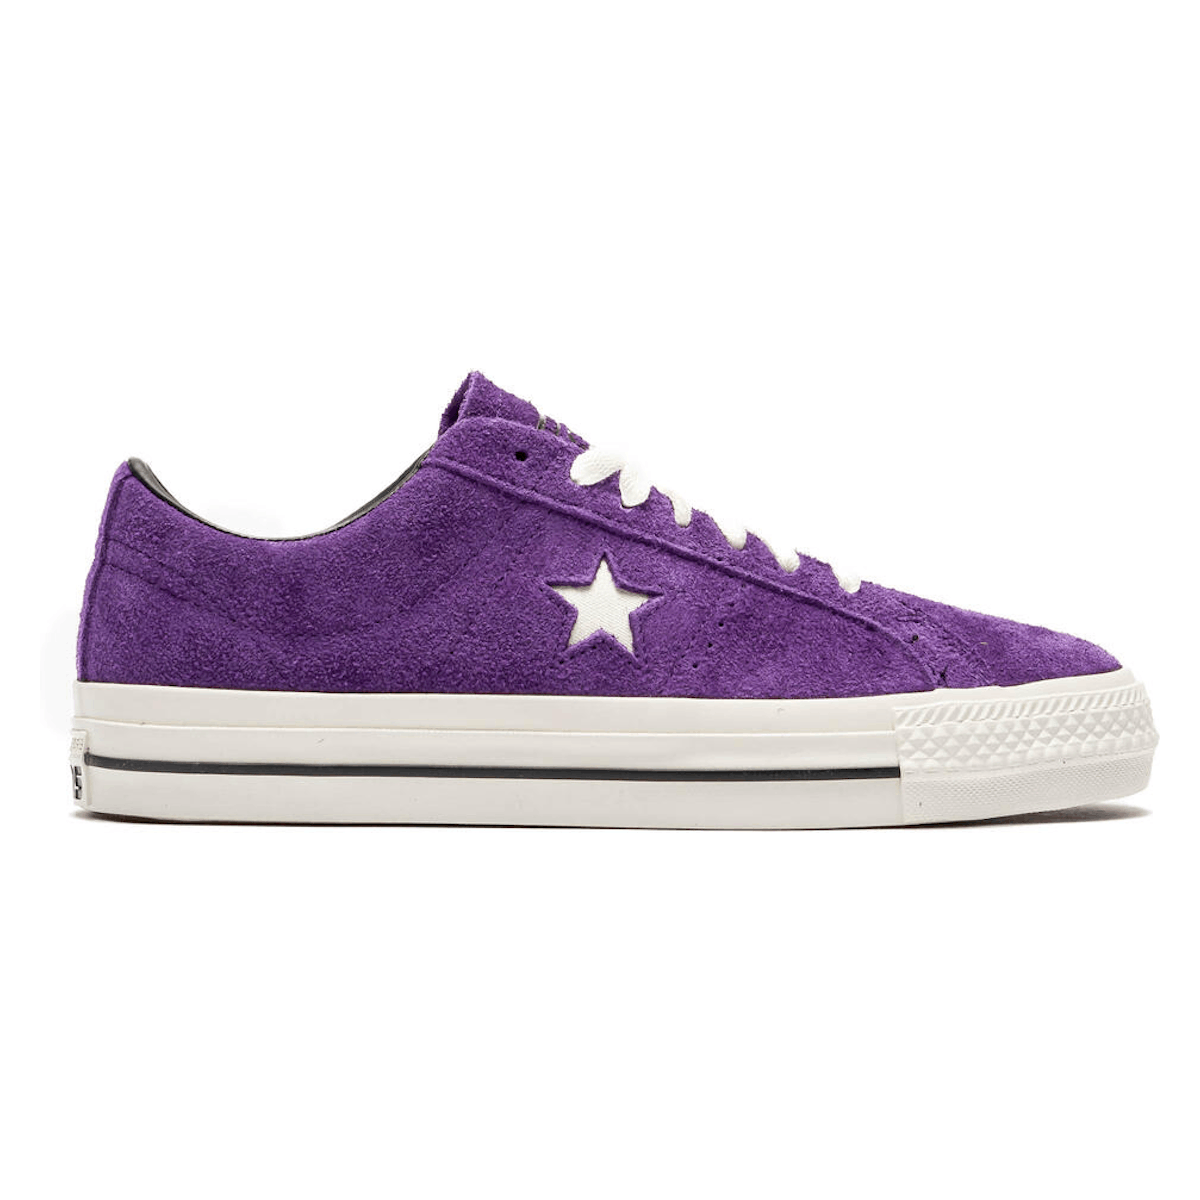 Converse One Star Pro "Night Purple"